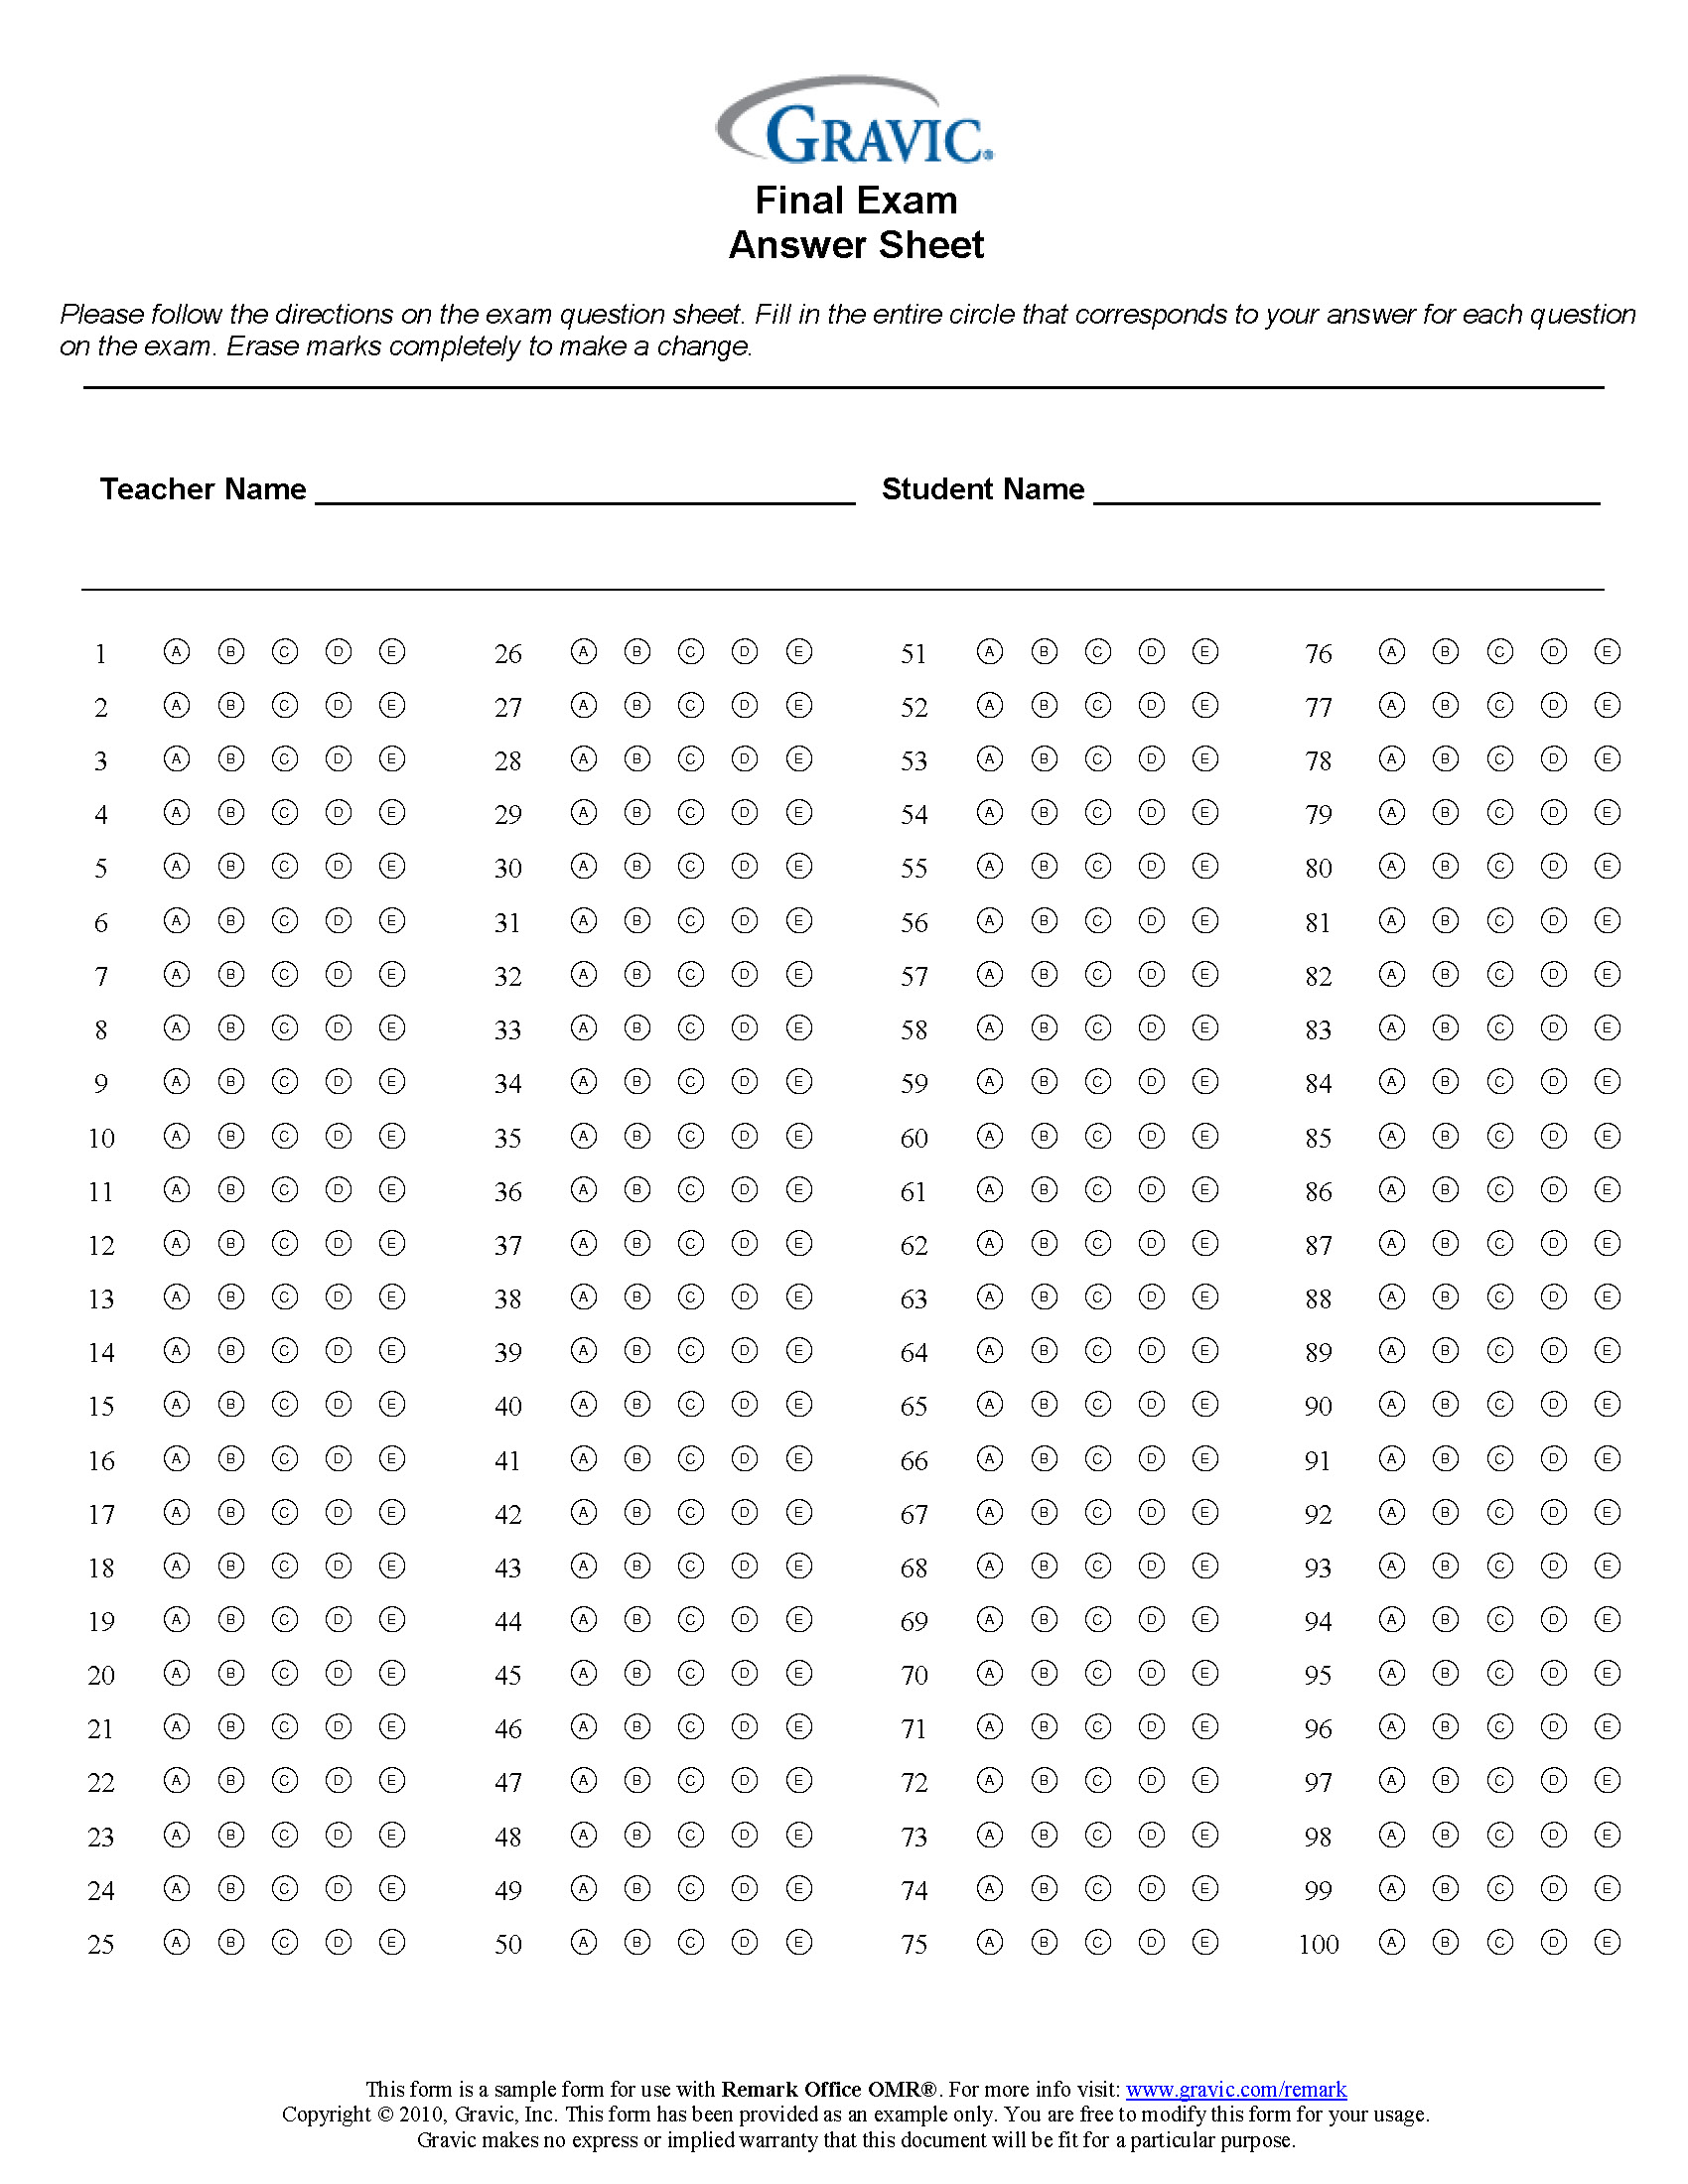 Final Exam 23 Question Test Answer Sheet · Remark Software In Blank Answer Sheet Template 1 100